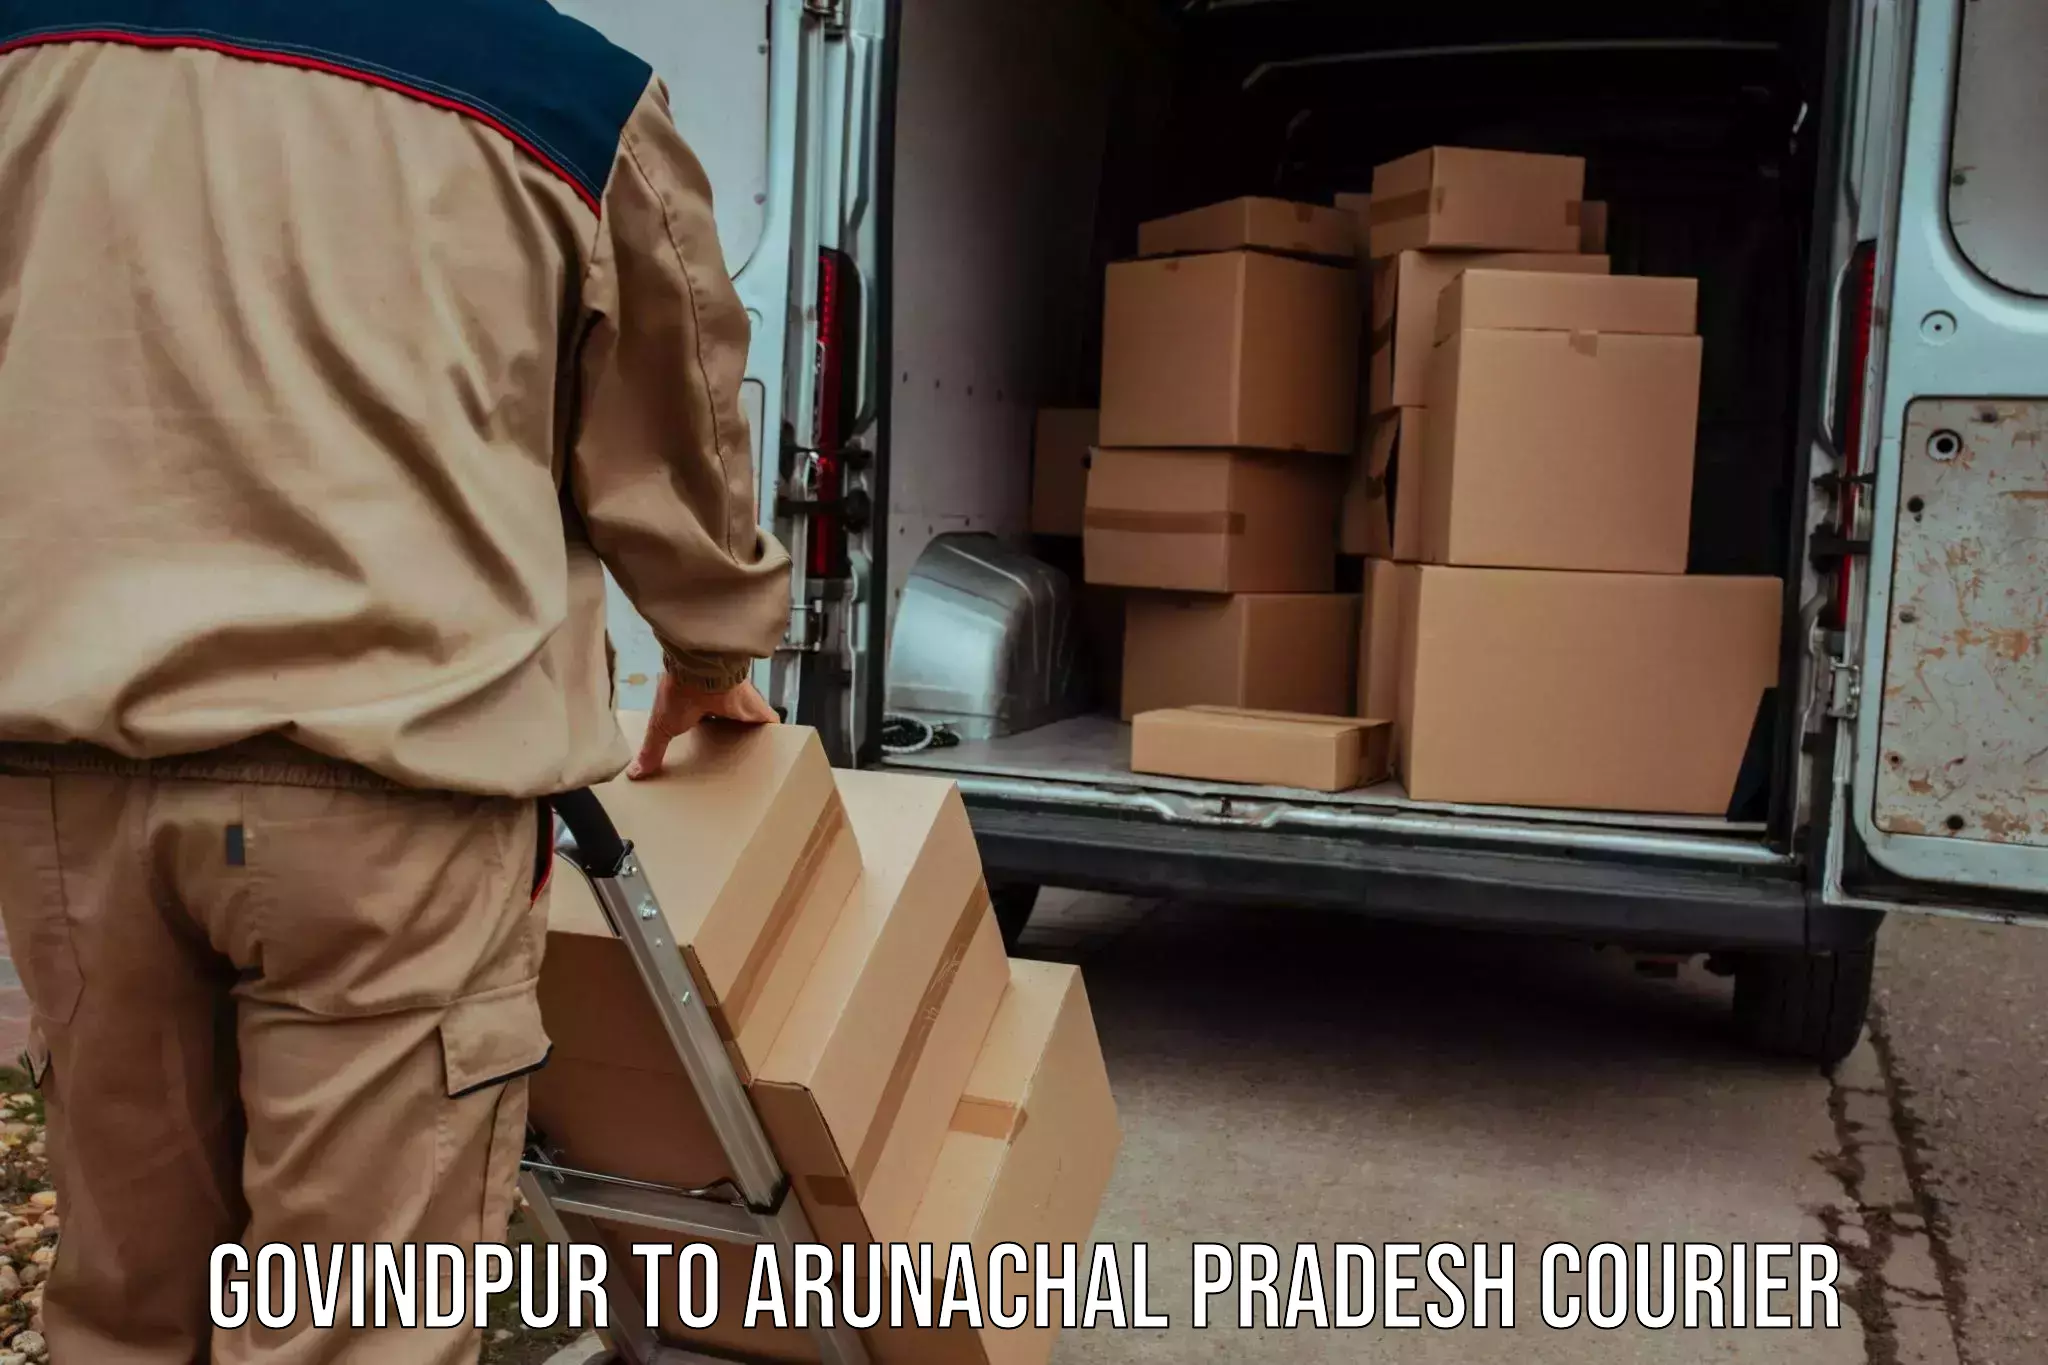 Digital courier platforms Govindpur to Arunachal Pradesh